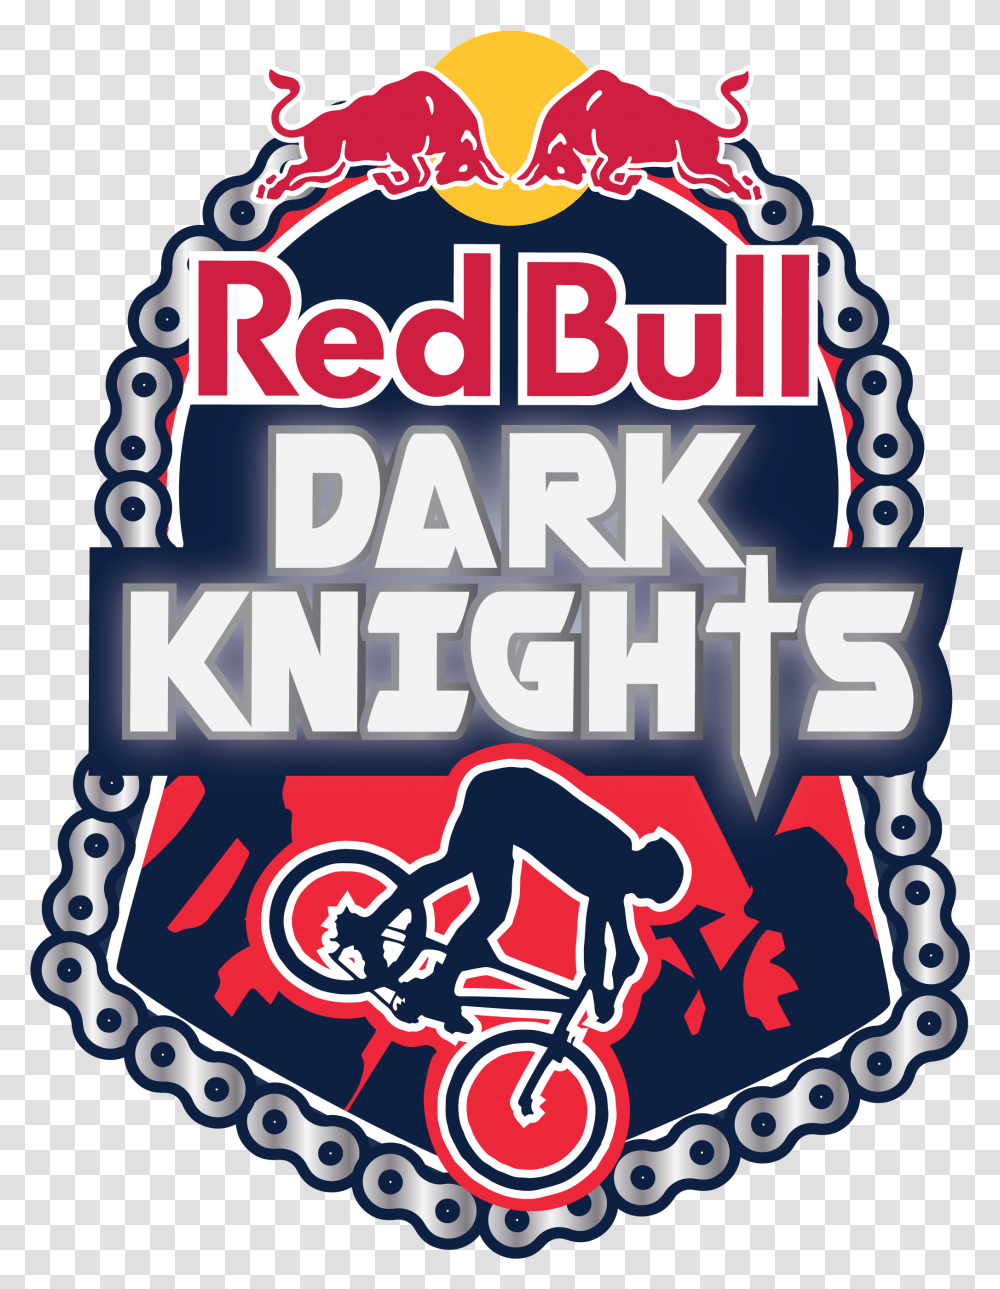 Red Bull Dark Knights, Label, Logo Transparent Png